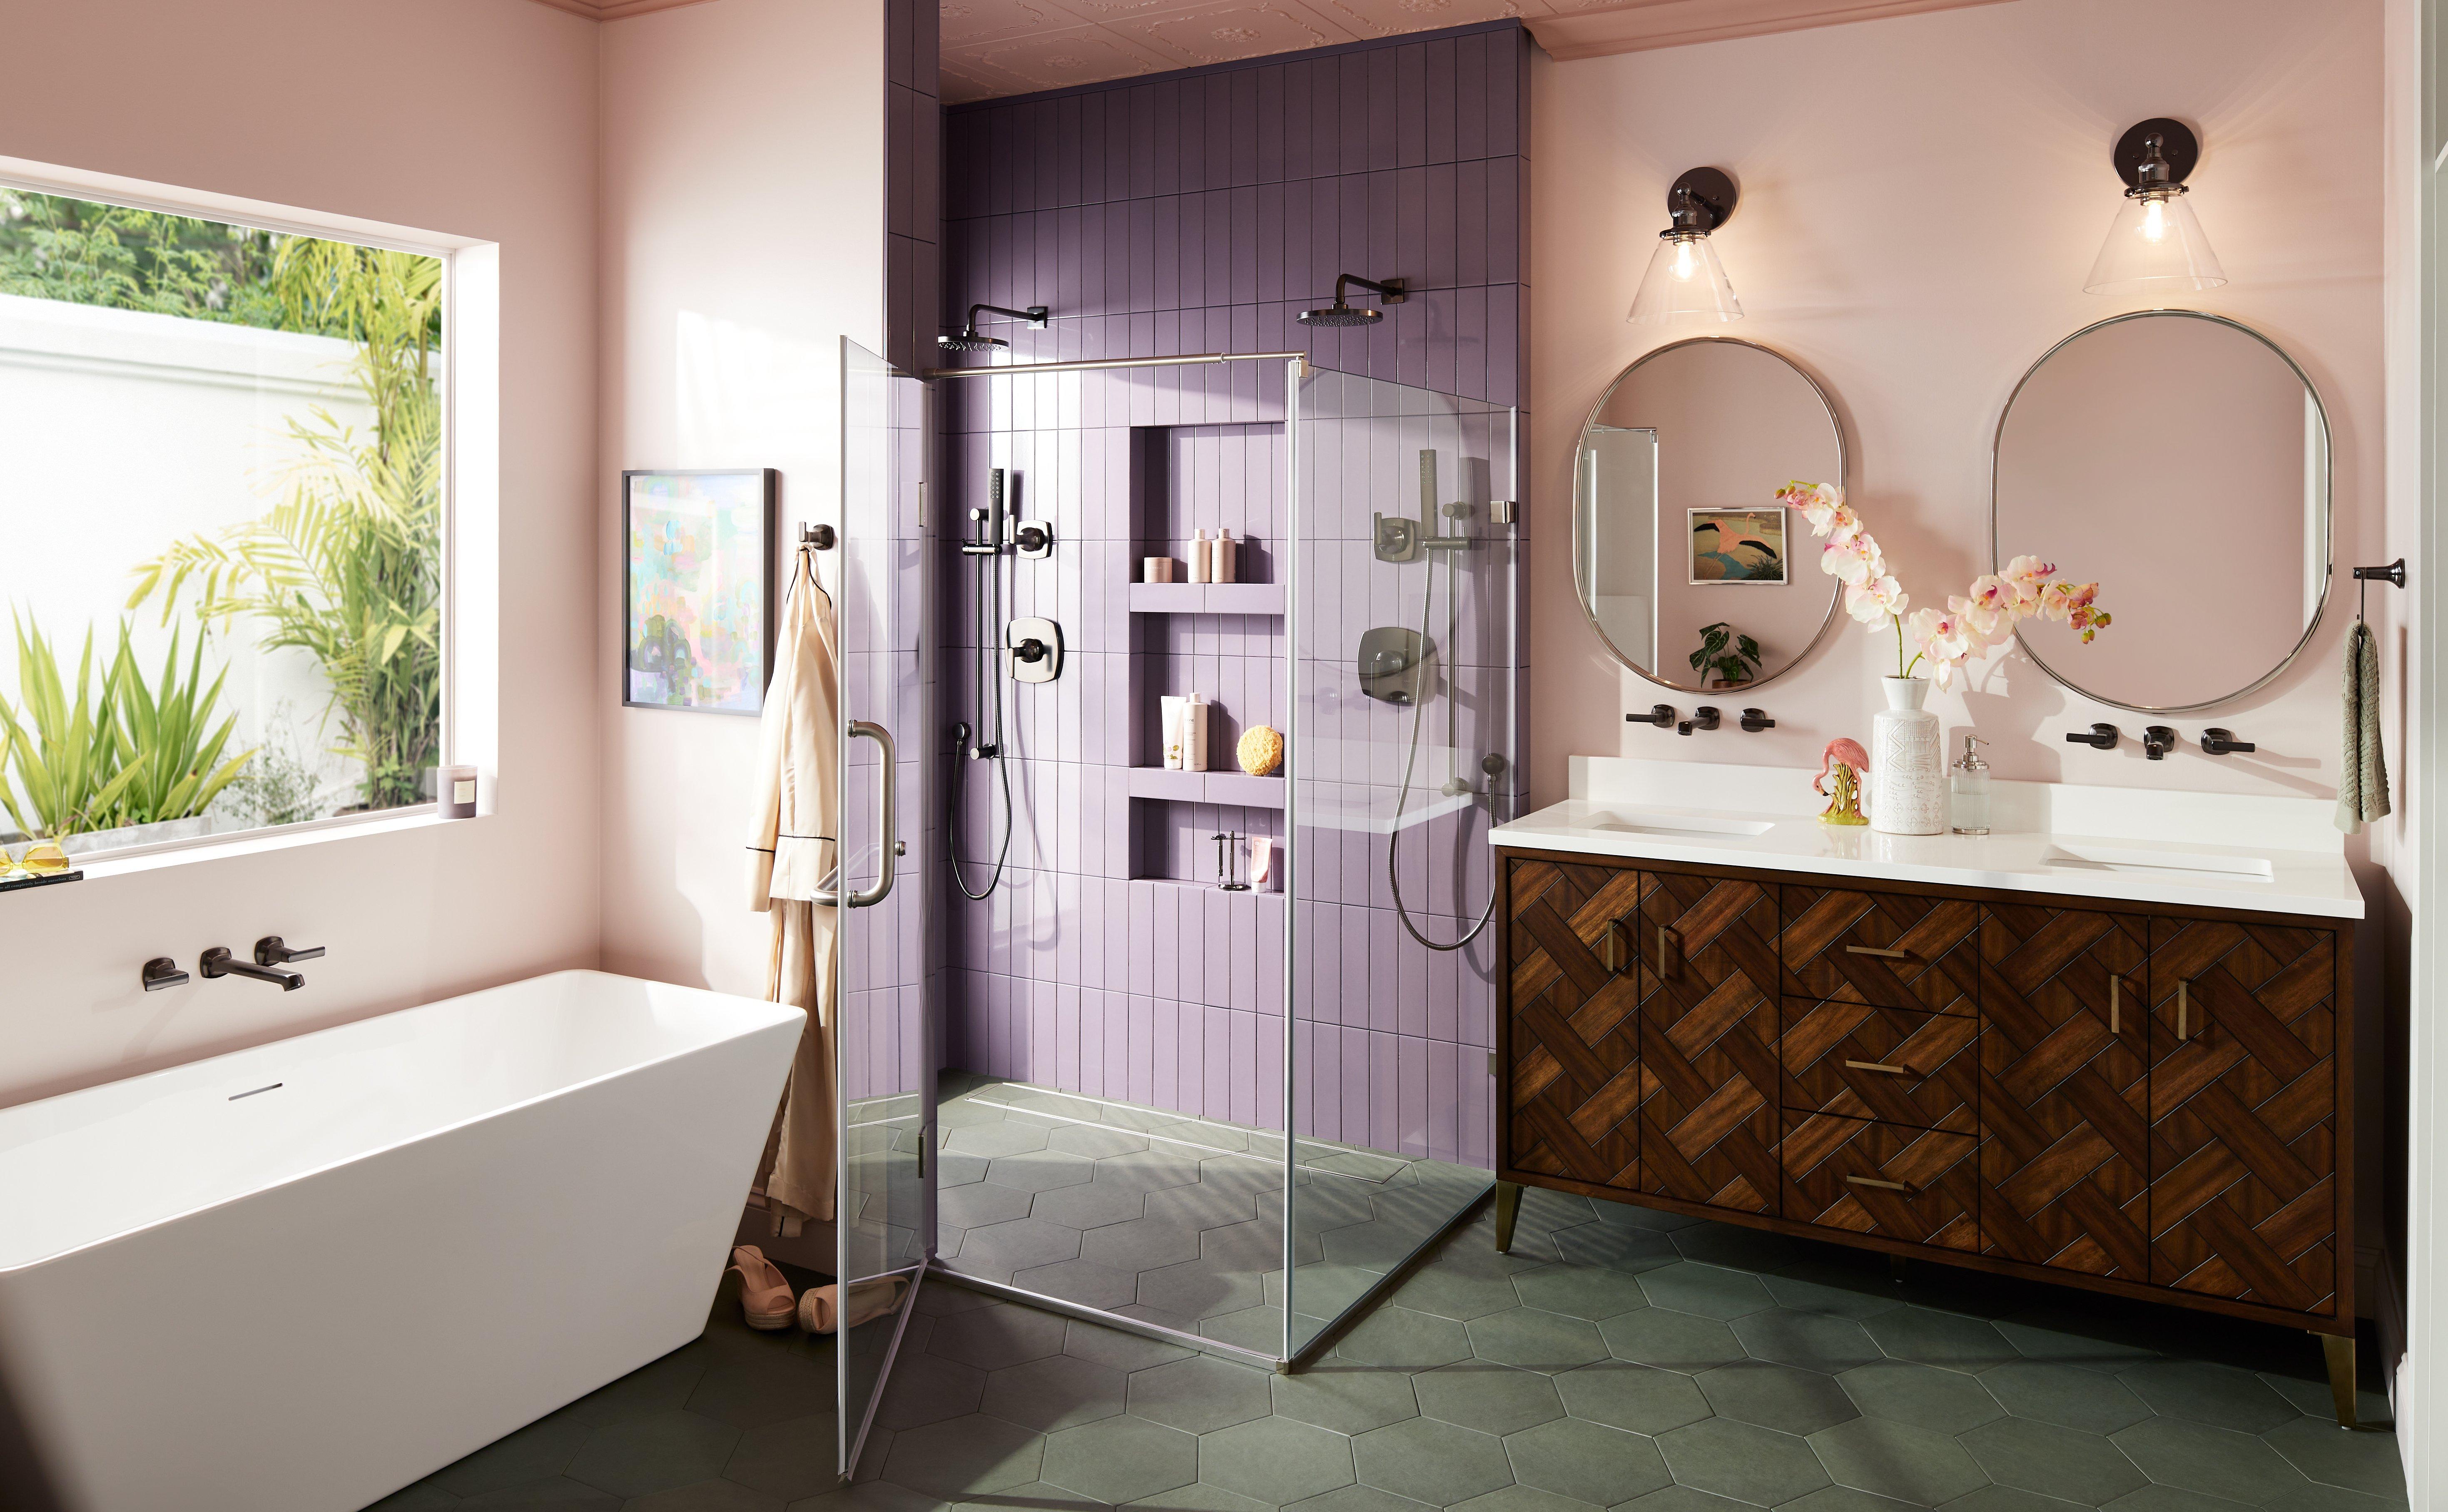 60" Patzi Vanity, Sefina Wall-Mount Bathroom Faucet & Tub Faucet in Gunmetal, Colborne Oval Mirror, Hibiscus Freestanding Tub